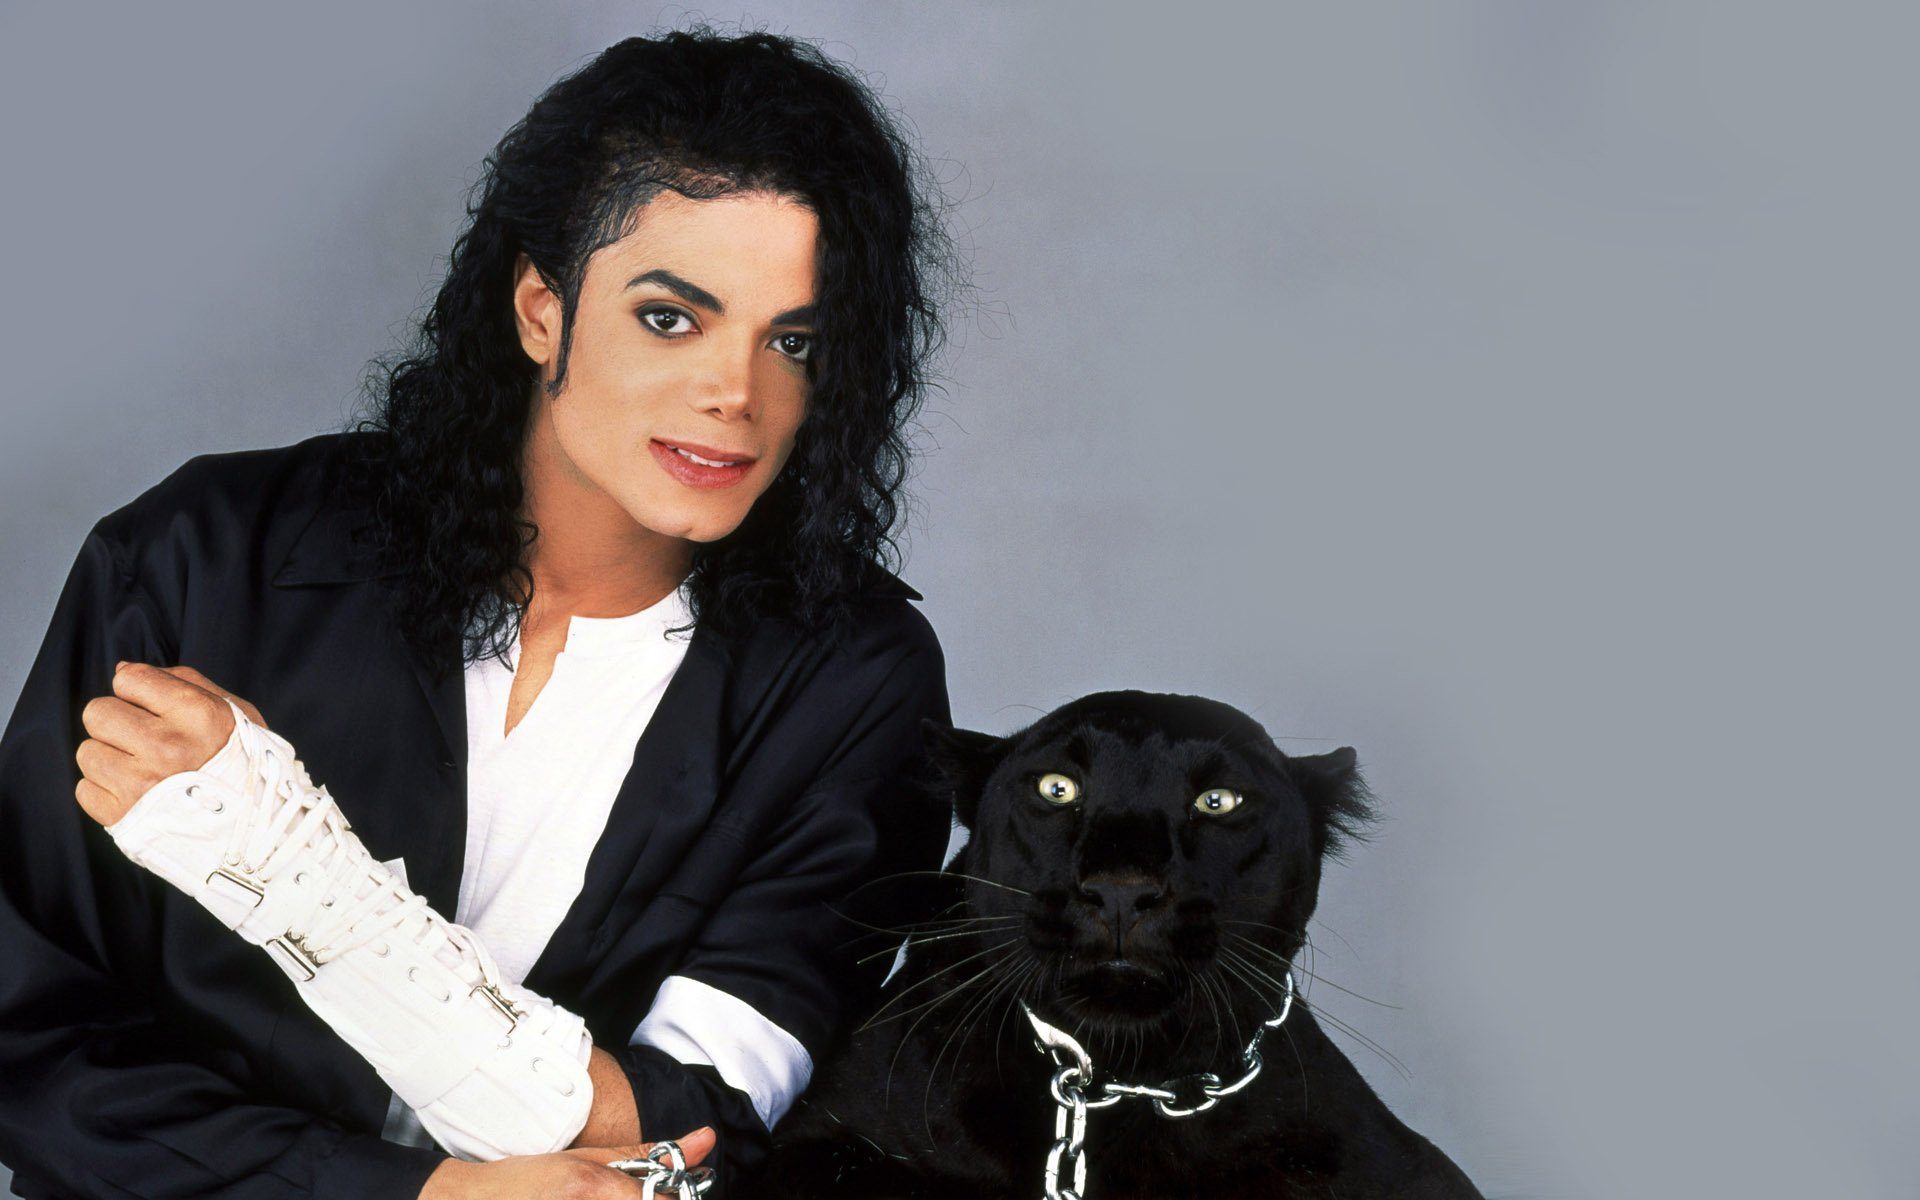 Michael Jackson – Black or White Mp3 Download